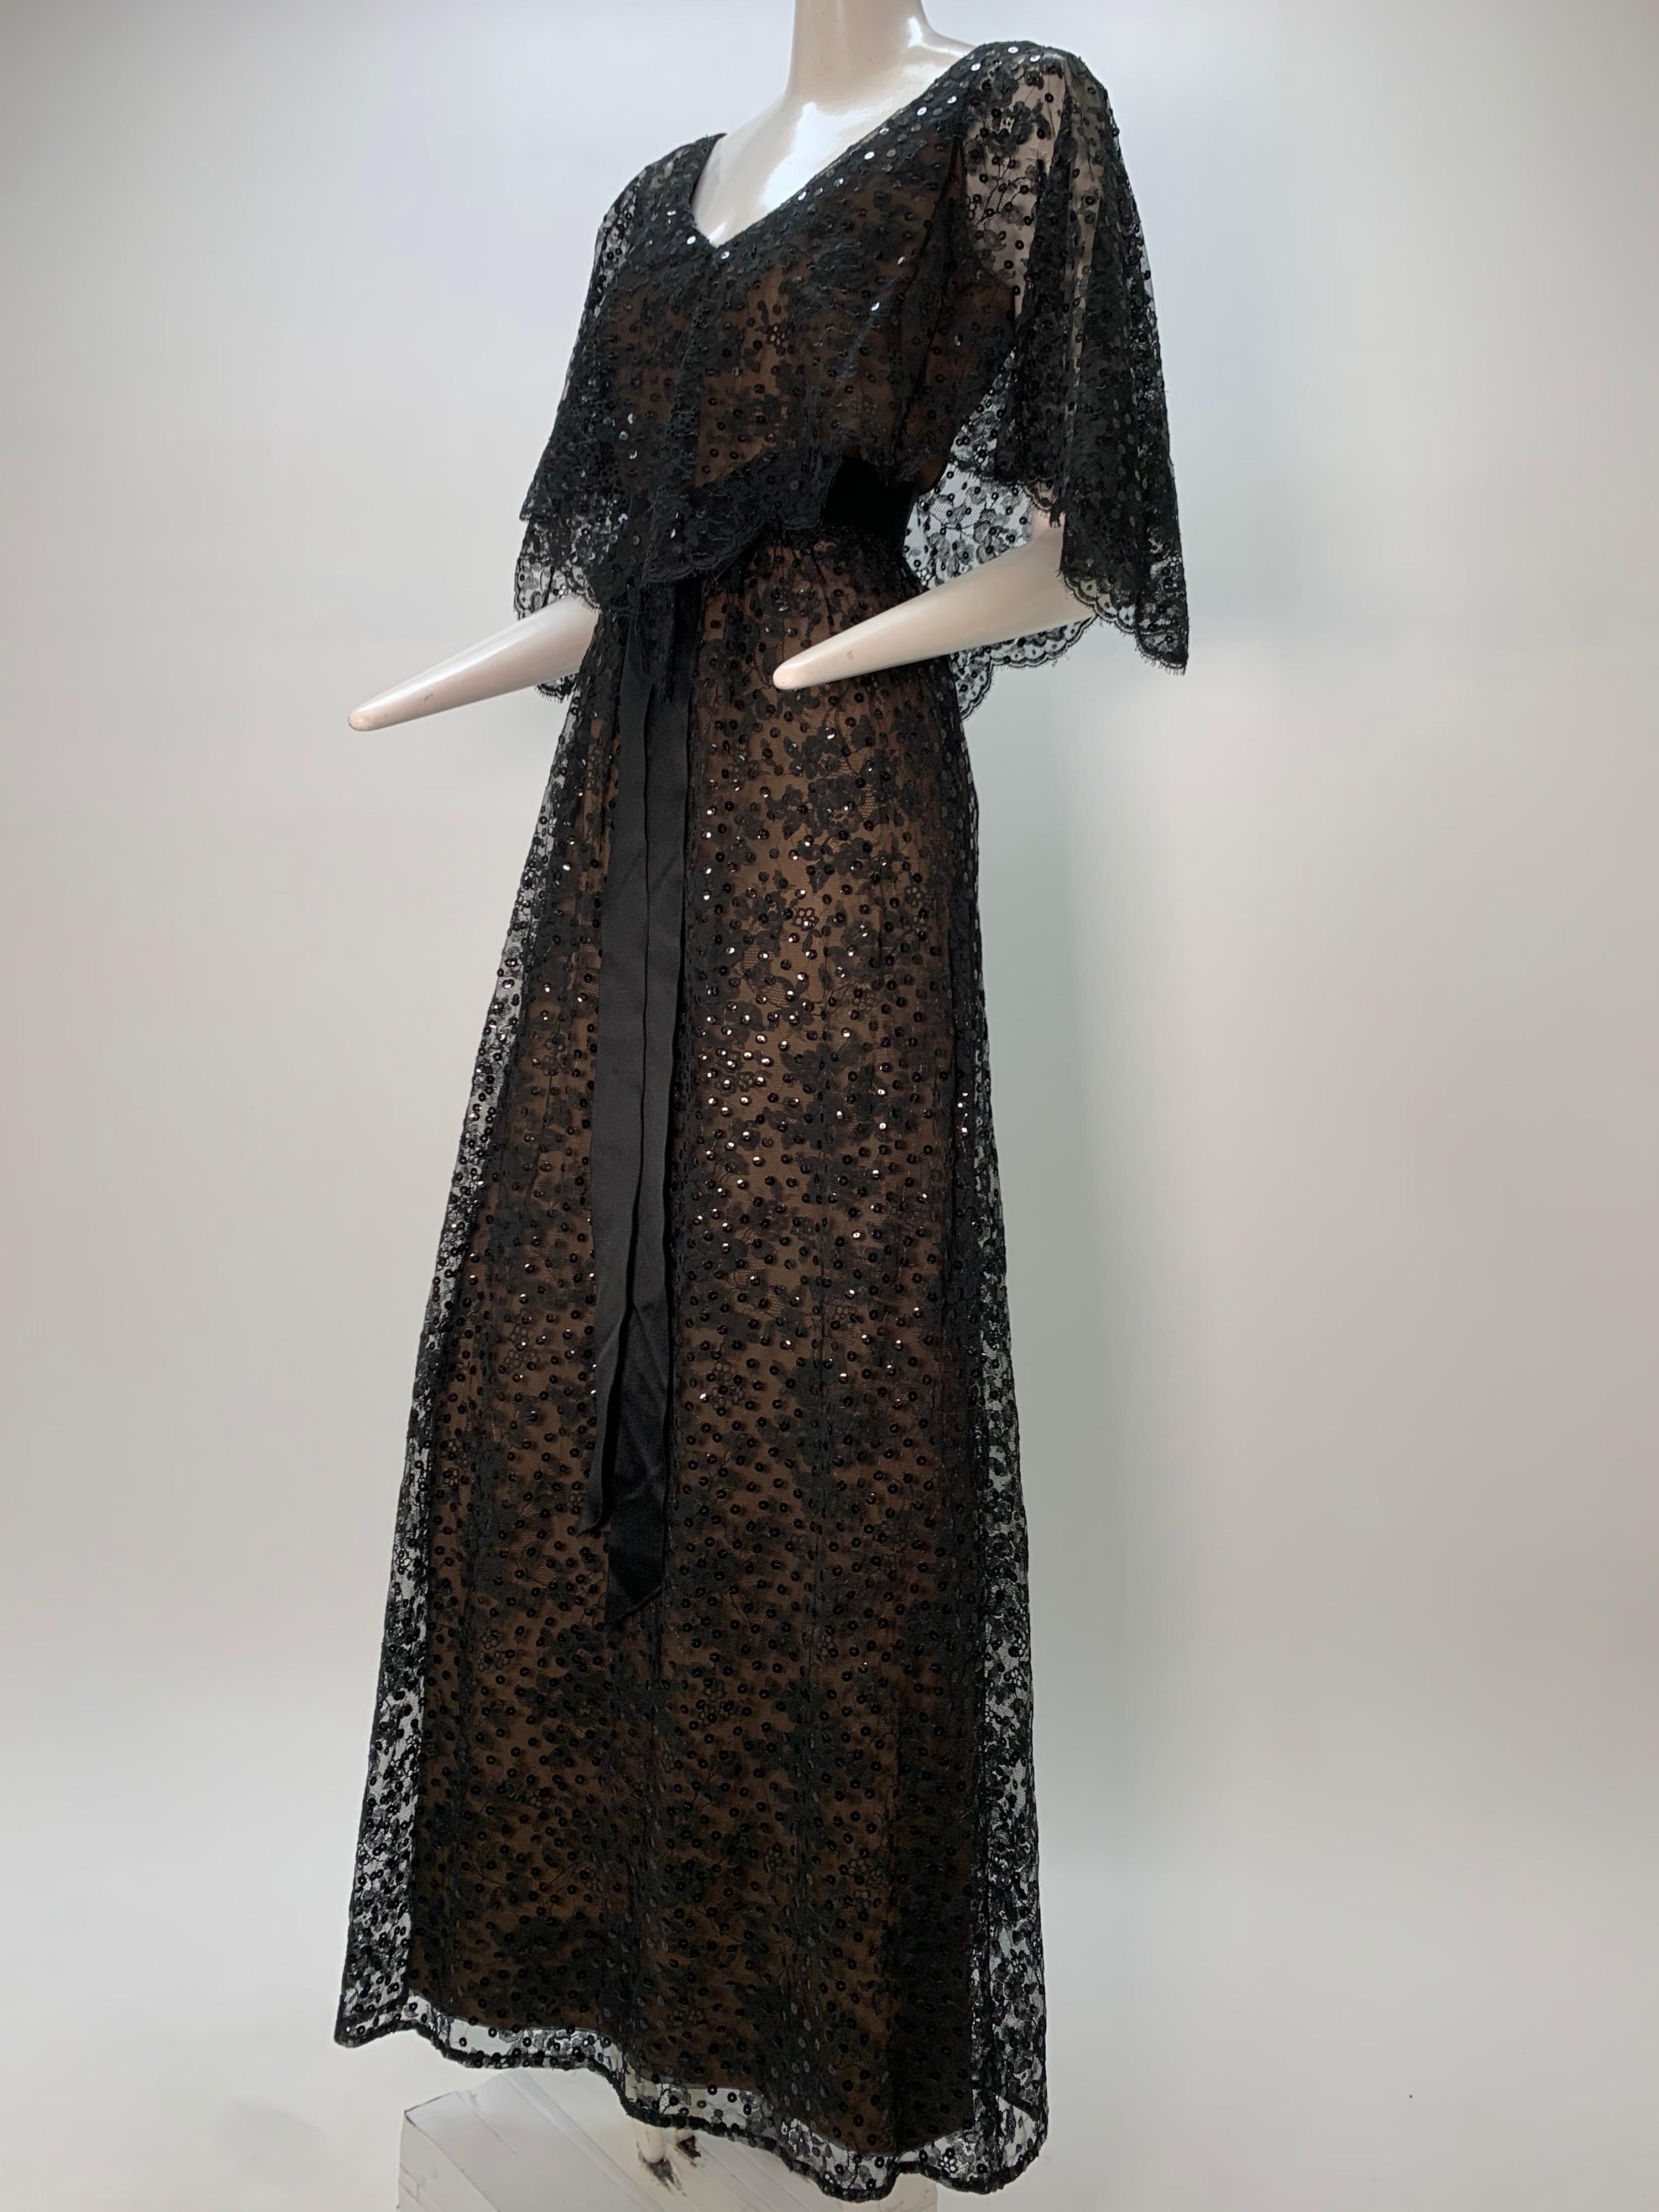 Sequin Dress in Black | Partywear | Carraig Donn